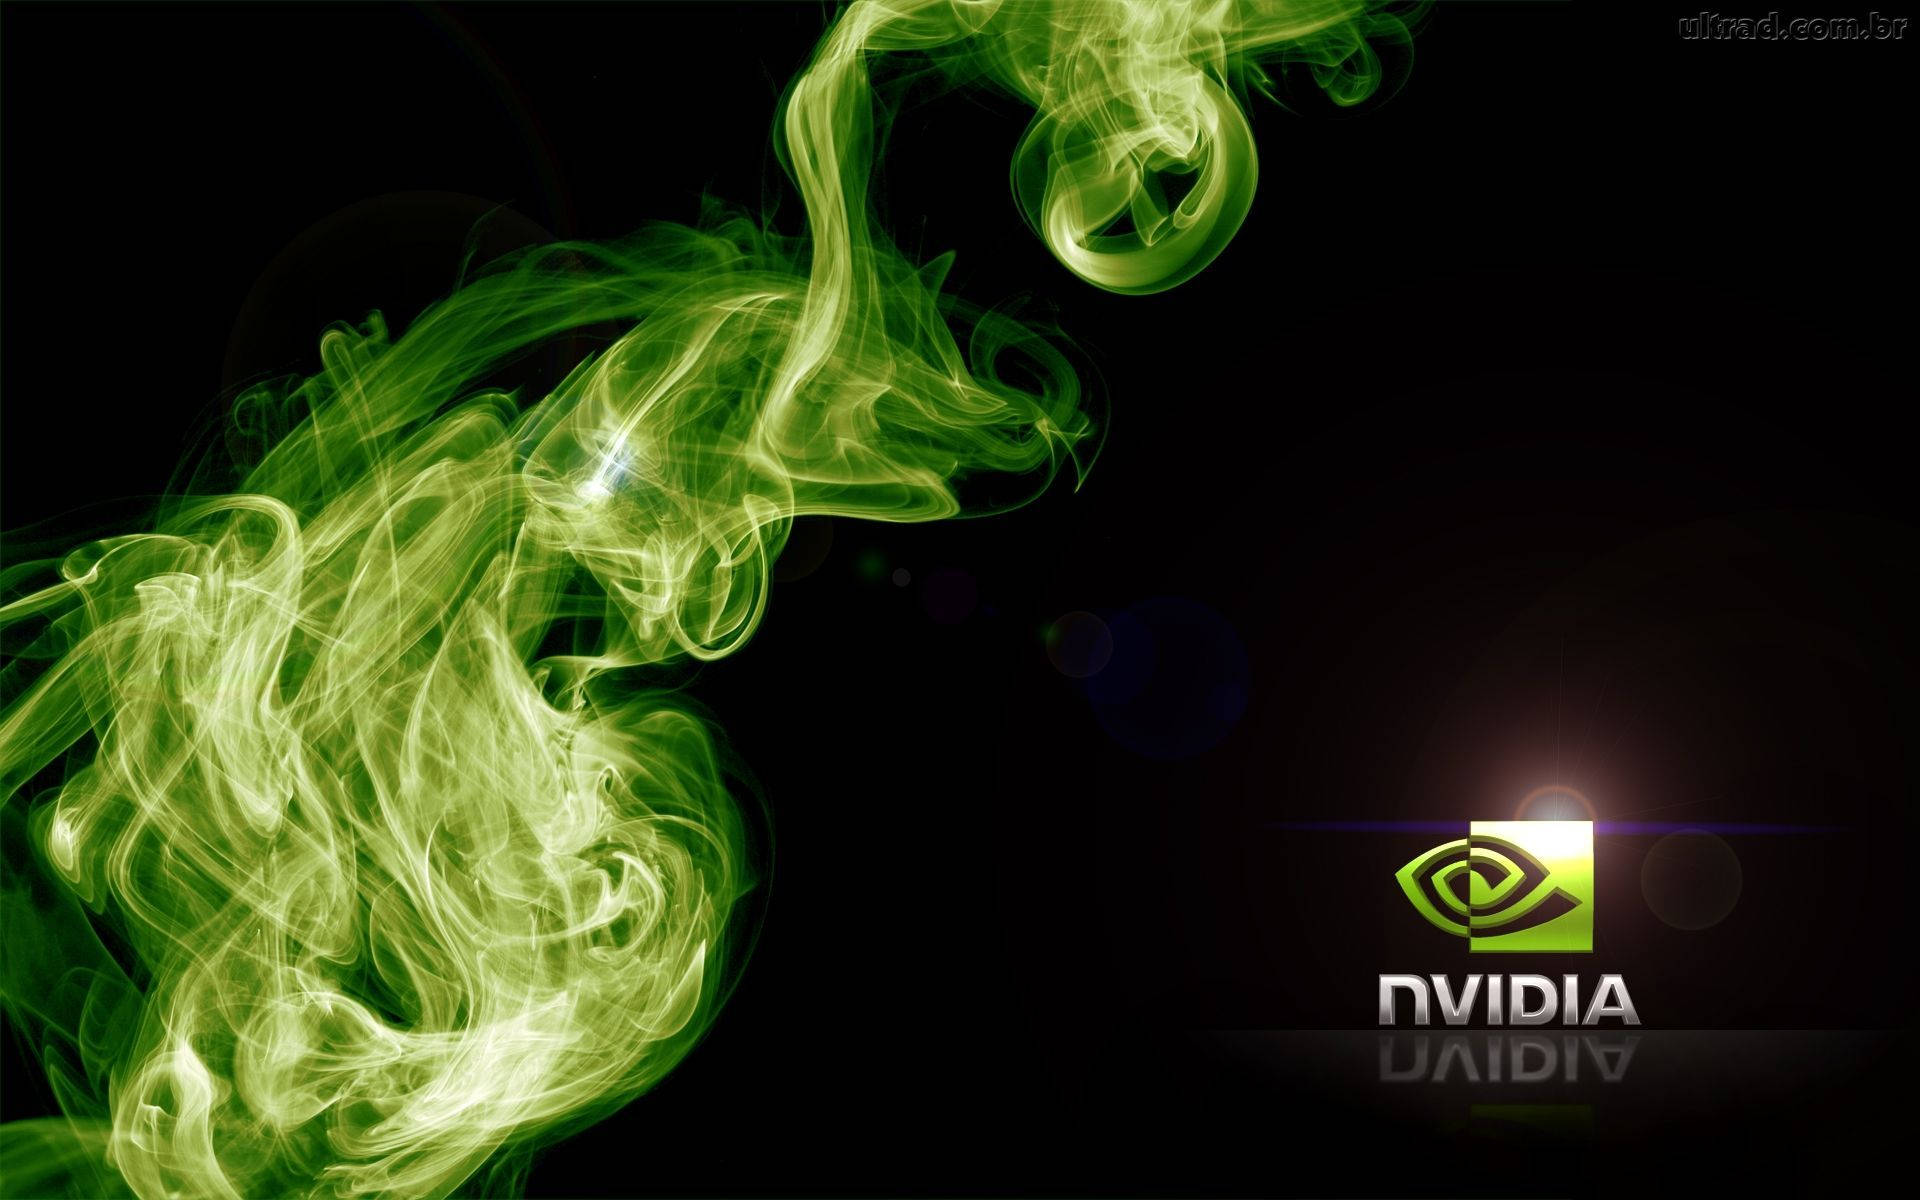 Nvidia Green Lights Logo Background